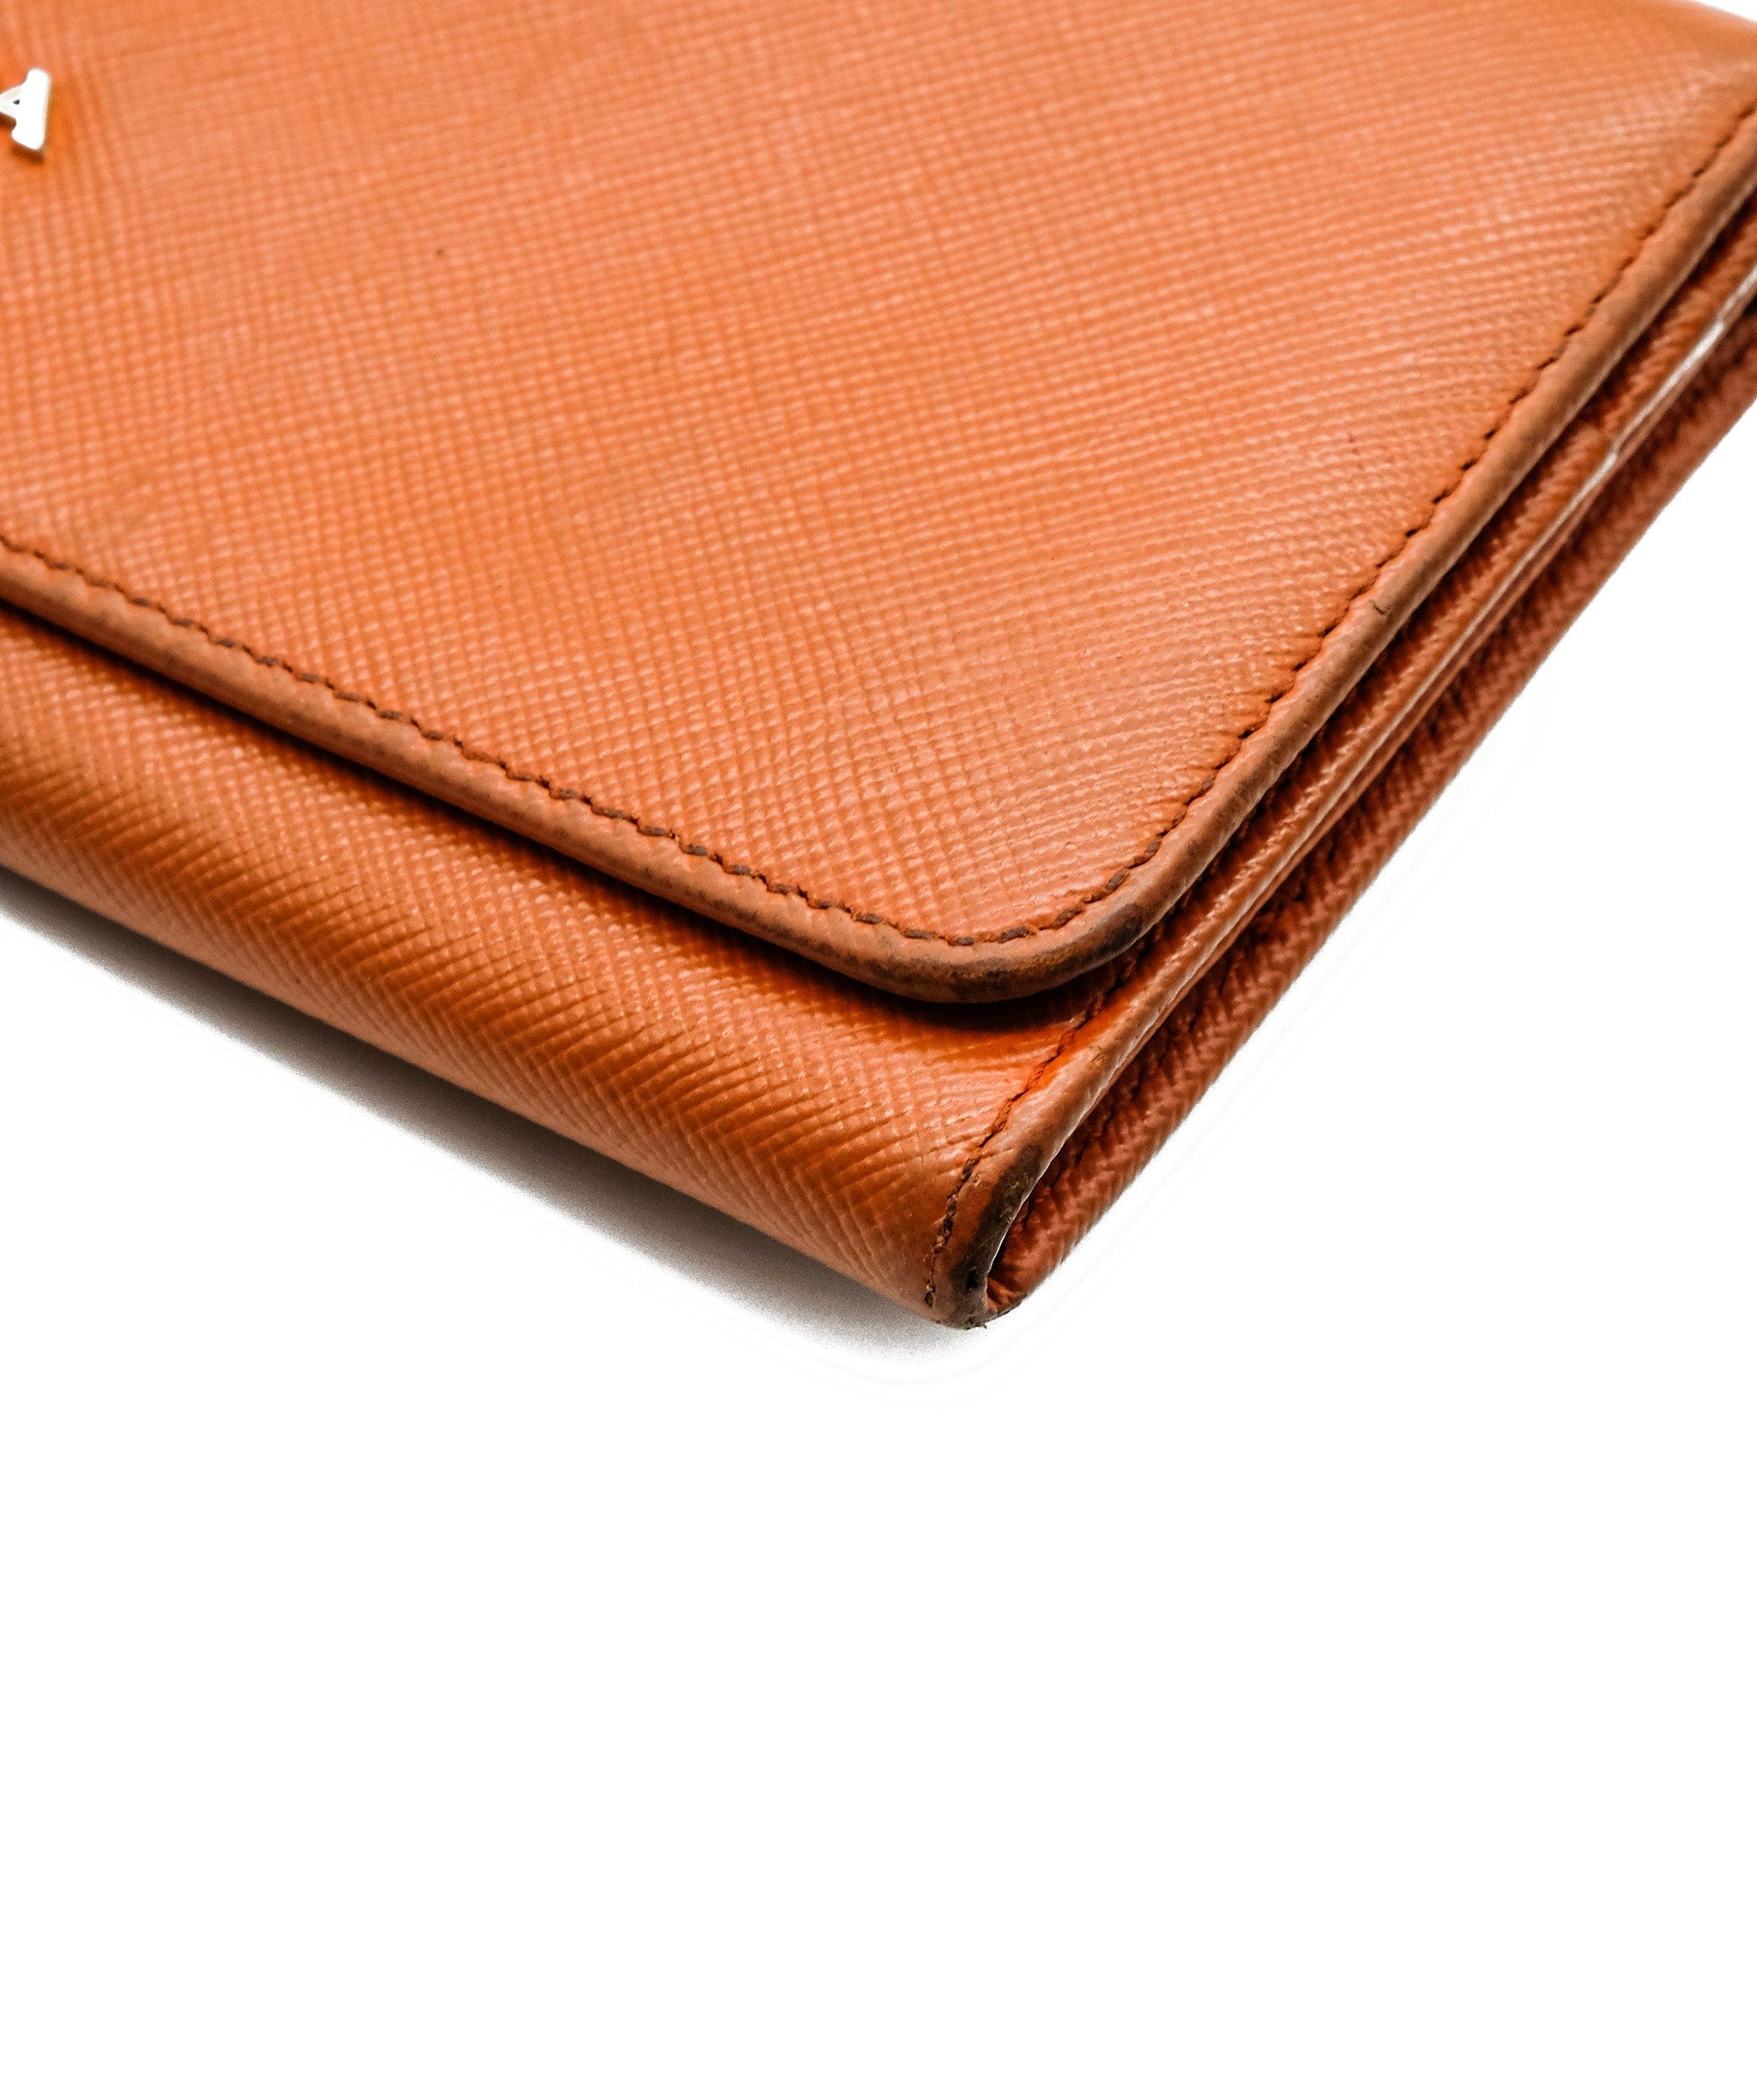 Prada Prada Saffiano Long Wallet Orange RJC1602